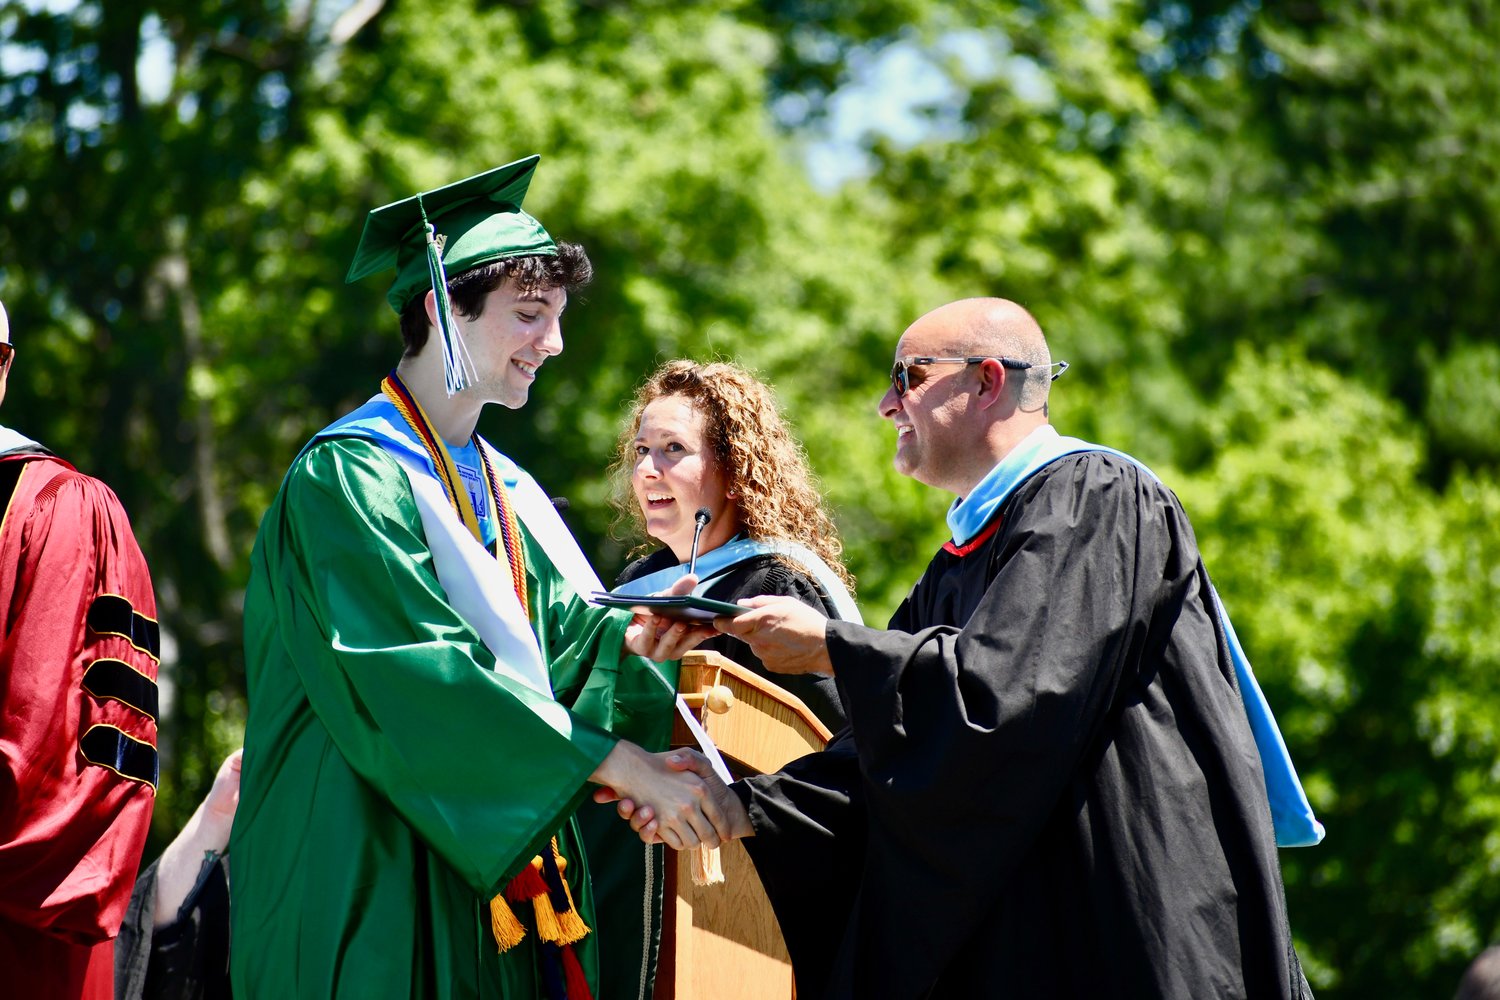 Principal Patrick DiClemente, right, presented diplomas to the graduates.